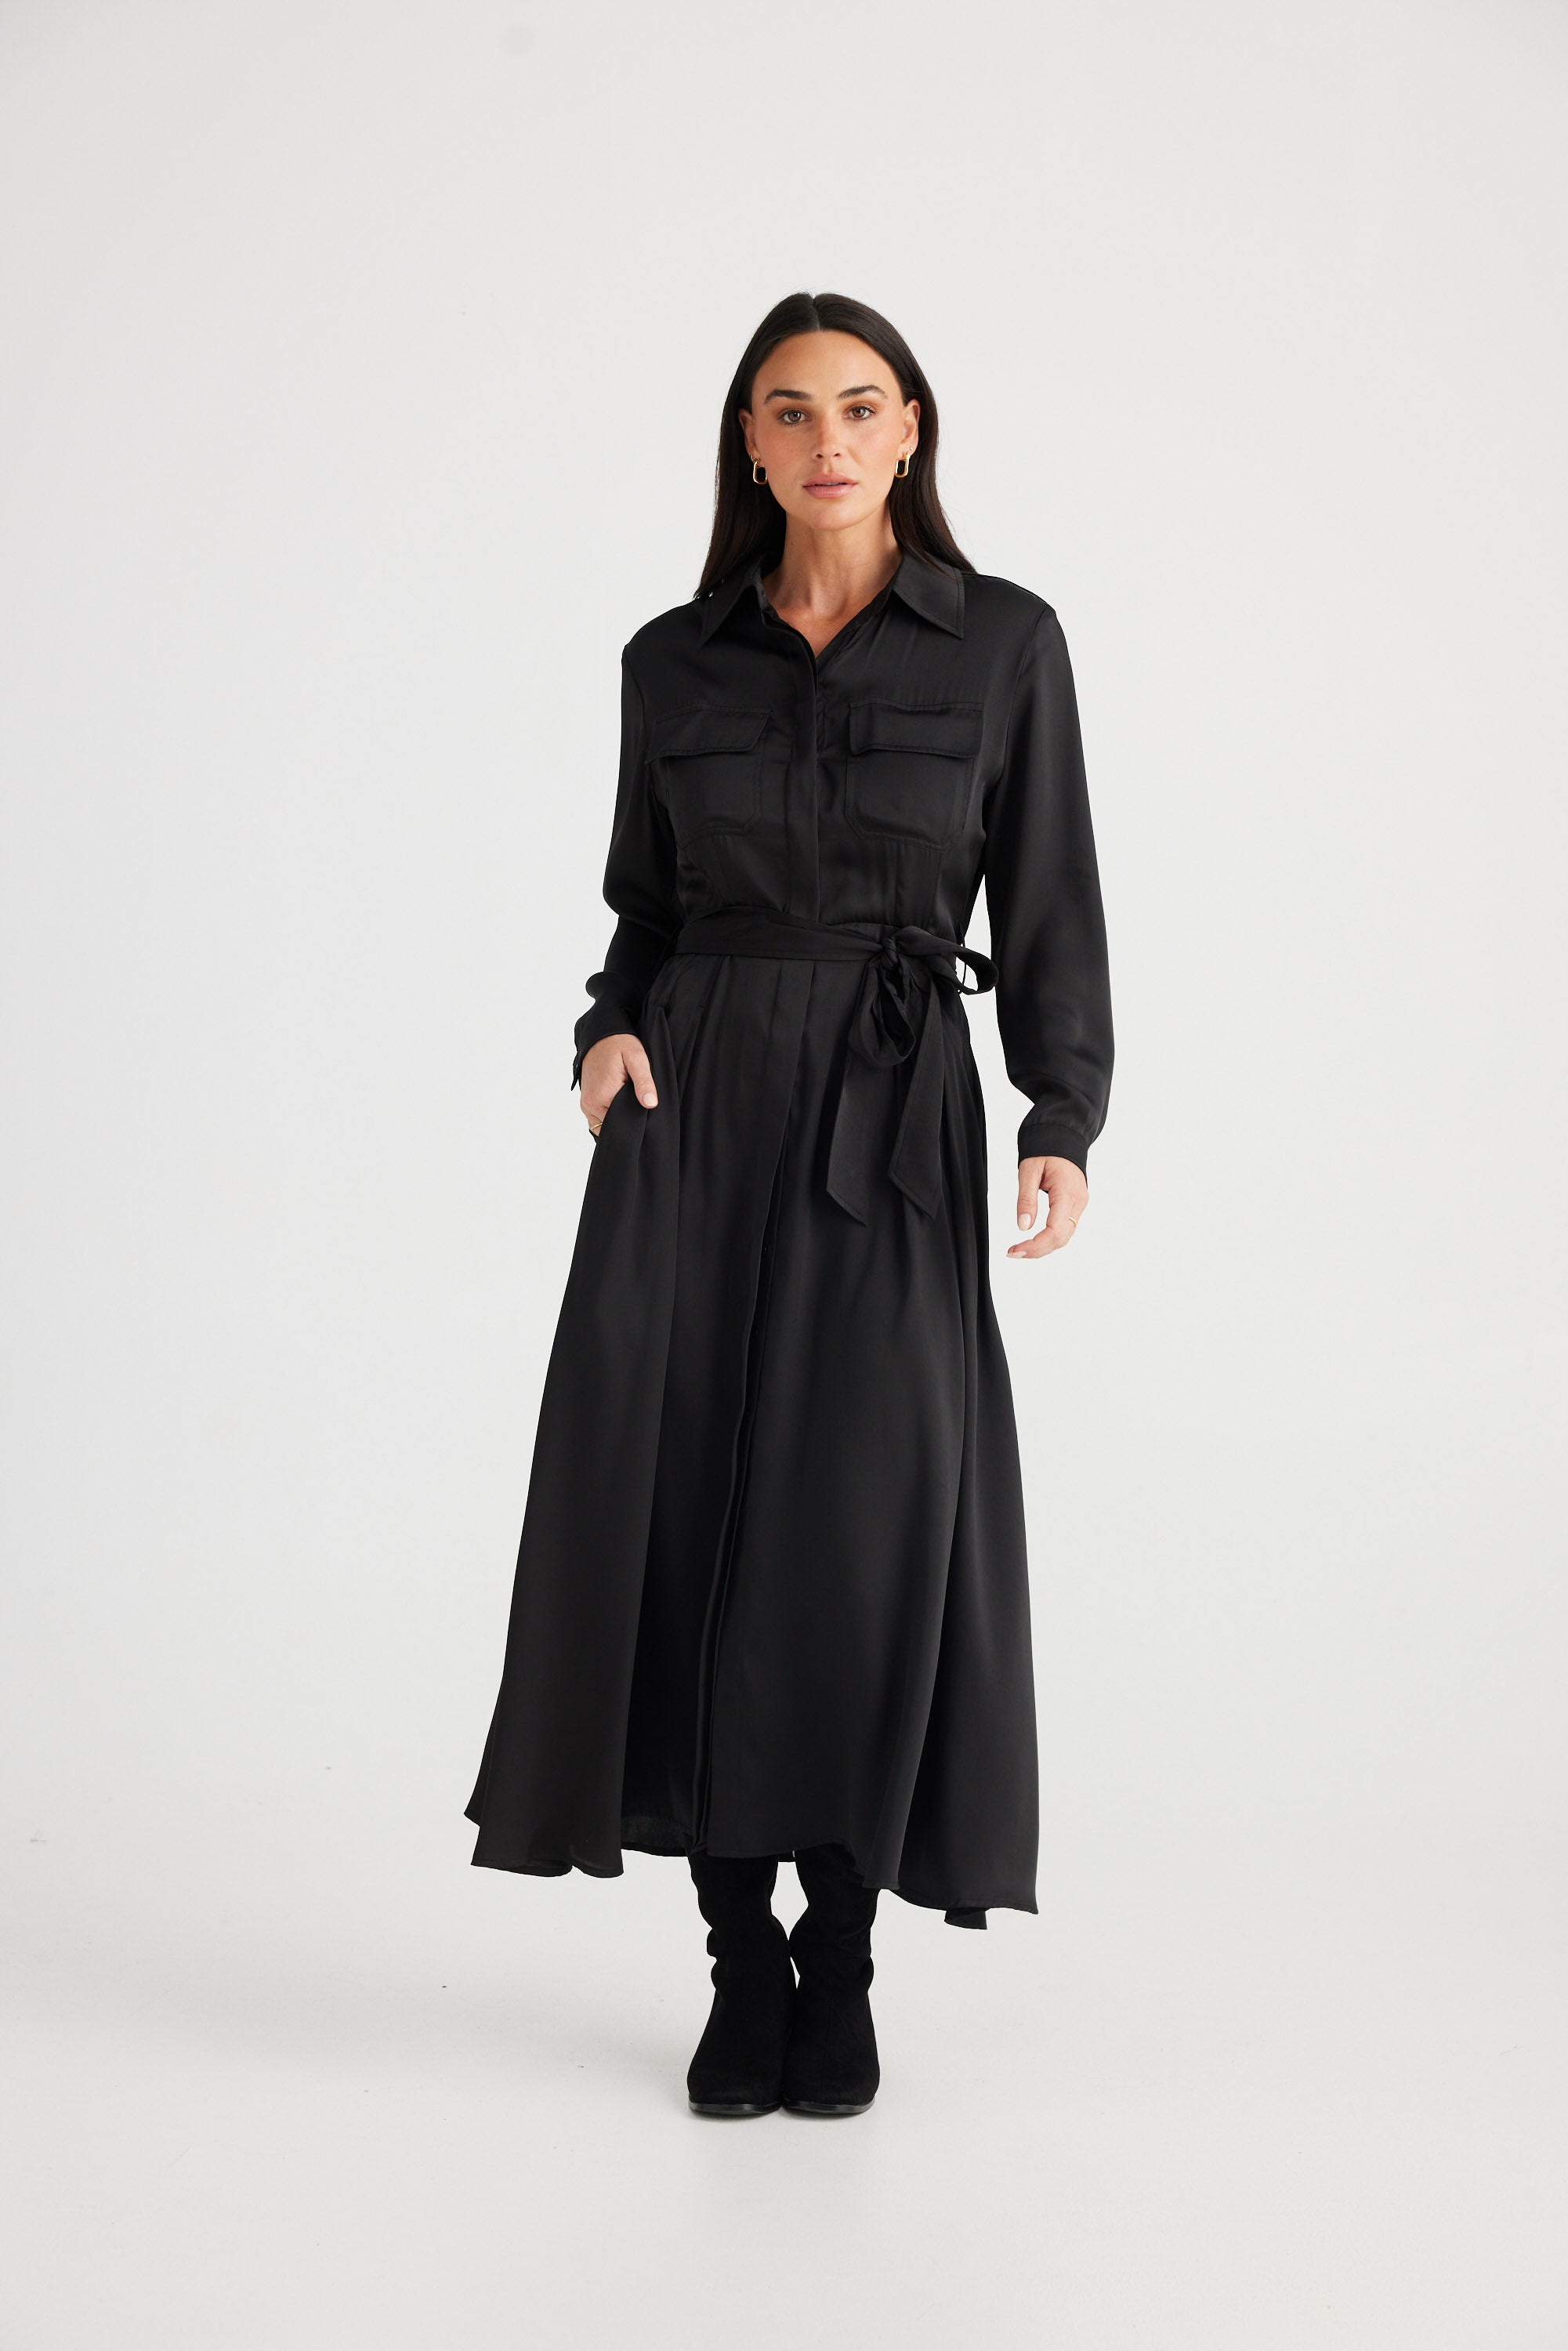 Rossellini 3/4 Sleeve Dress - Black-Dresses-Brave & True-The Bay Room